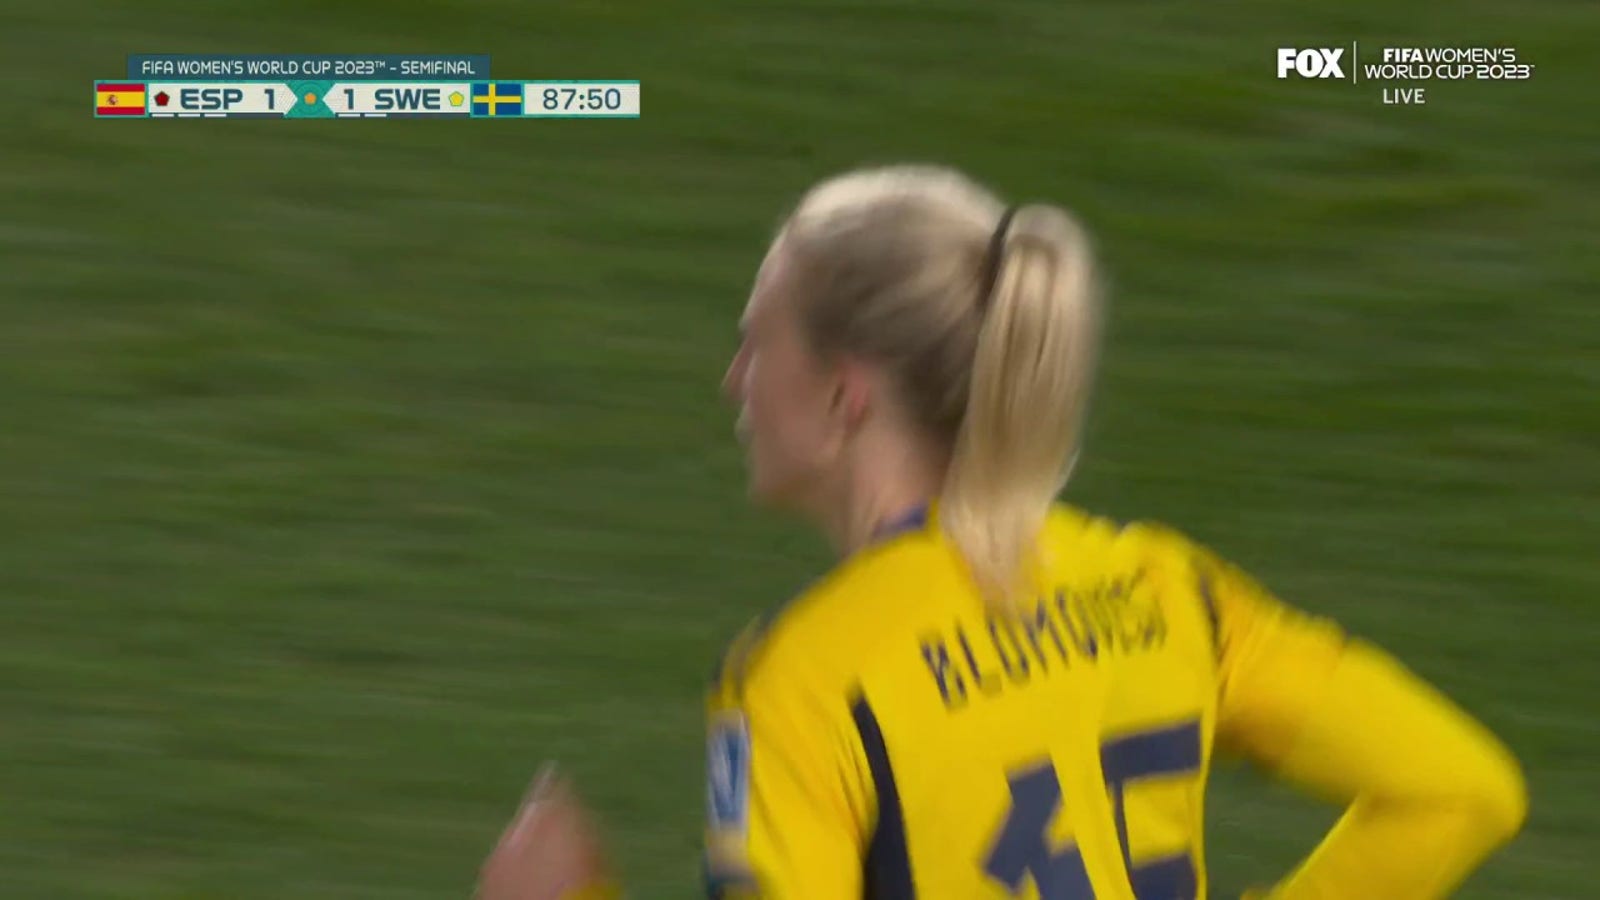 Sweden's Rebecka Blomqvist evens it in the 88th minute